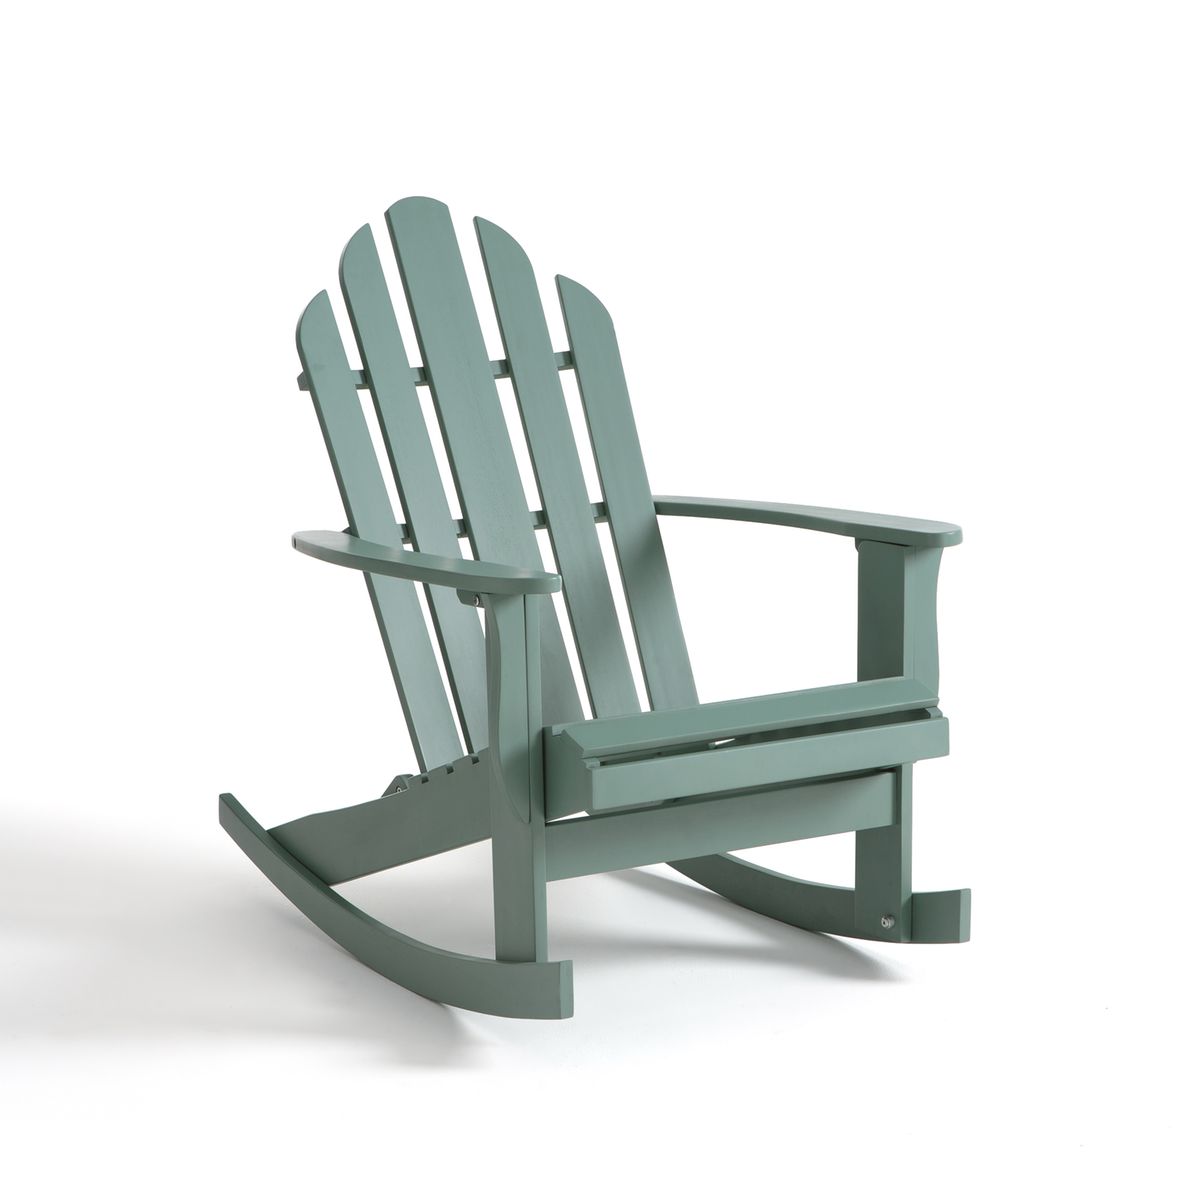 Rocking chair de jardin Théodore, style Adirondack